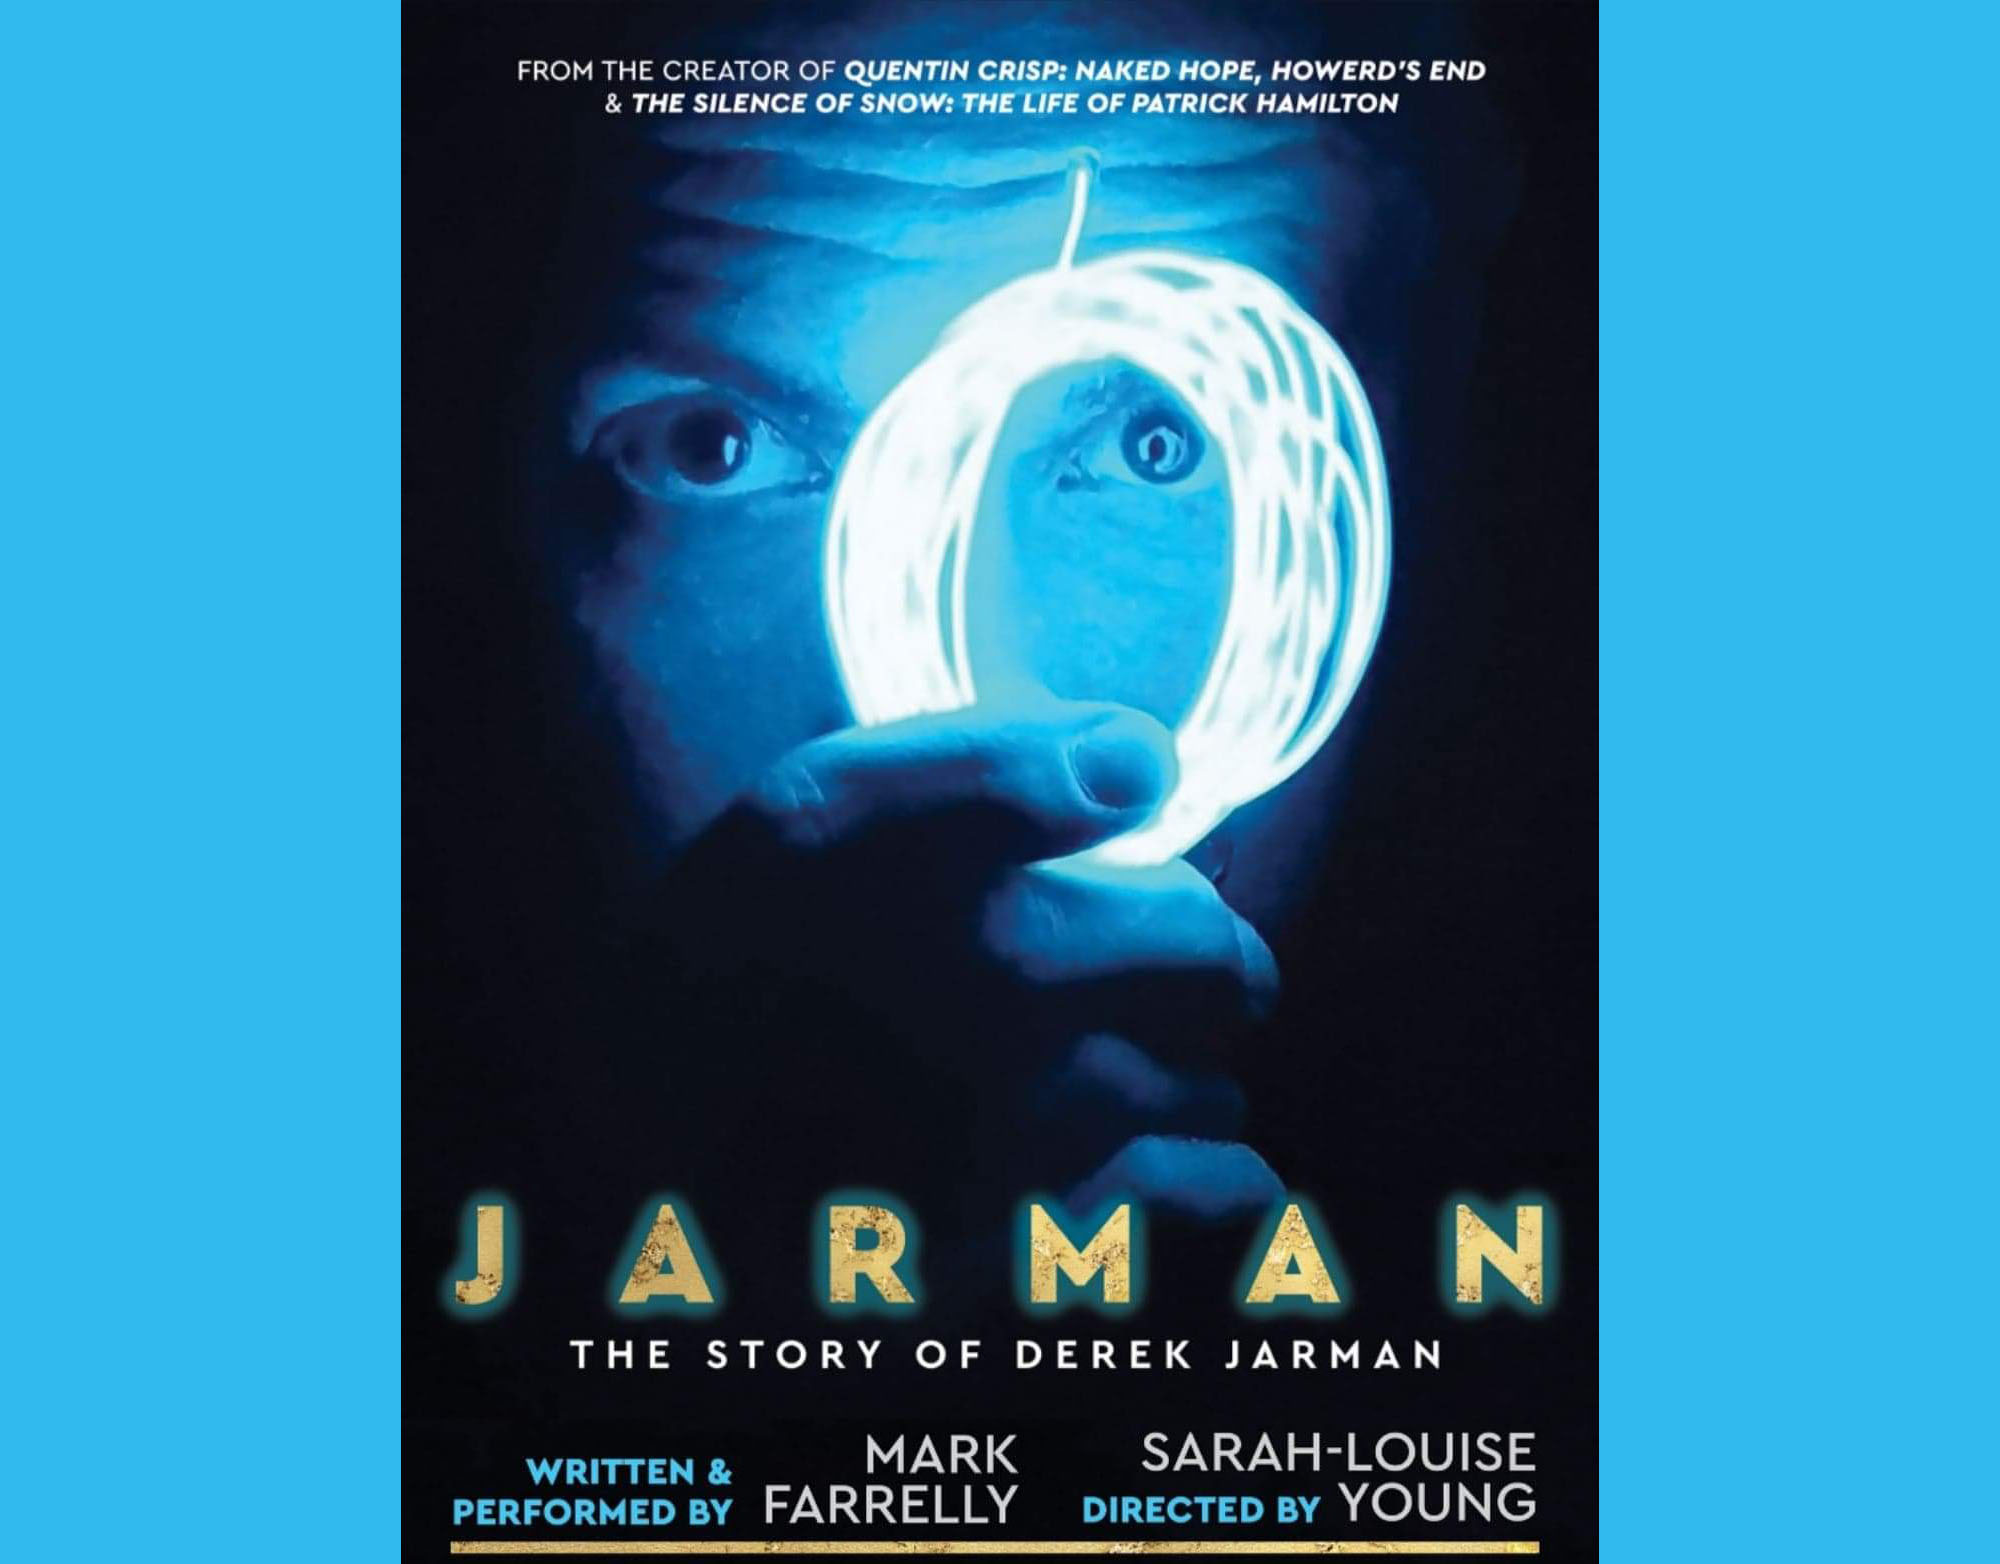 Blue poster advertising Jarman - the story of Derek Jarman